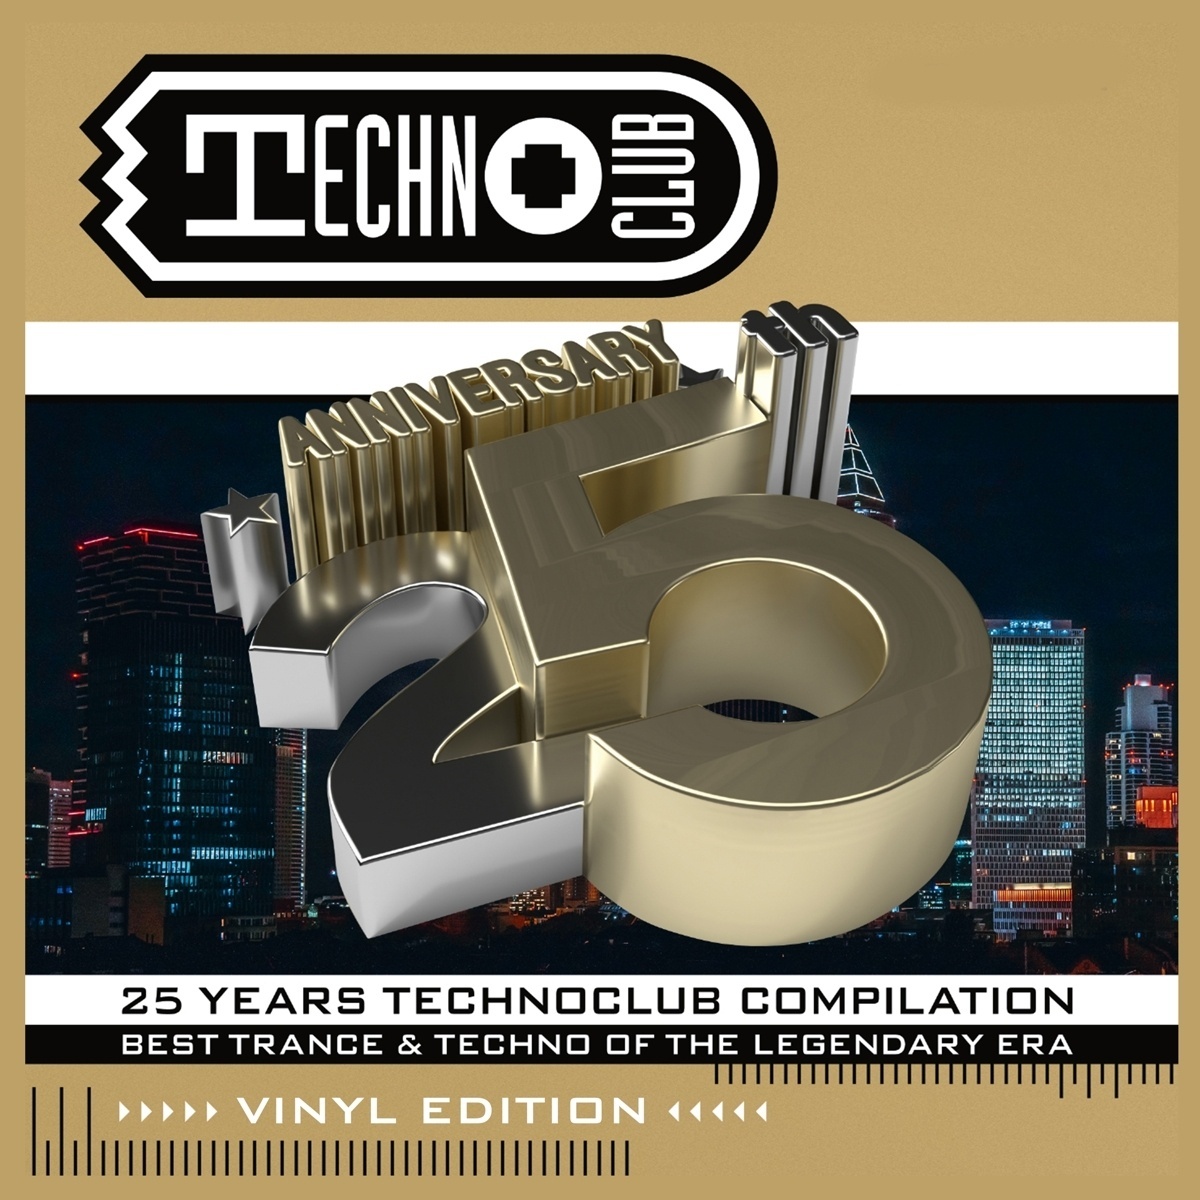 25 YEARS TECHNOCLUB COMPILATION VINYL EDITION - Quench  Talla 2xlc Feat. Junk Project  Dito  Binary Finary  Talla 2Xlc  Zyrus7. (LP)